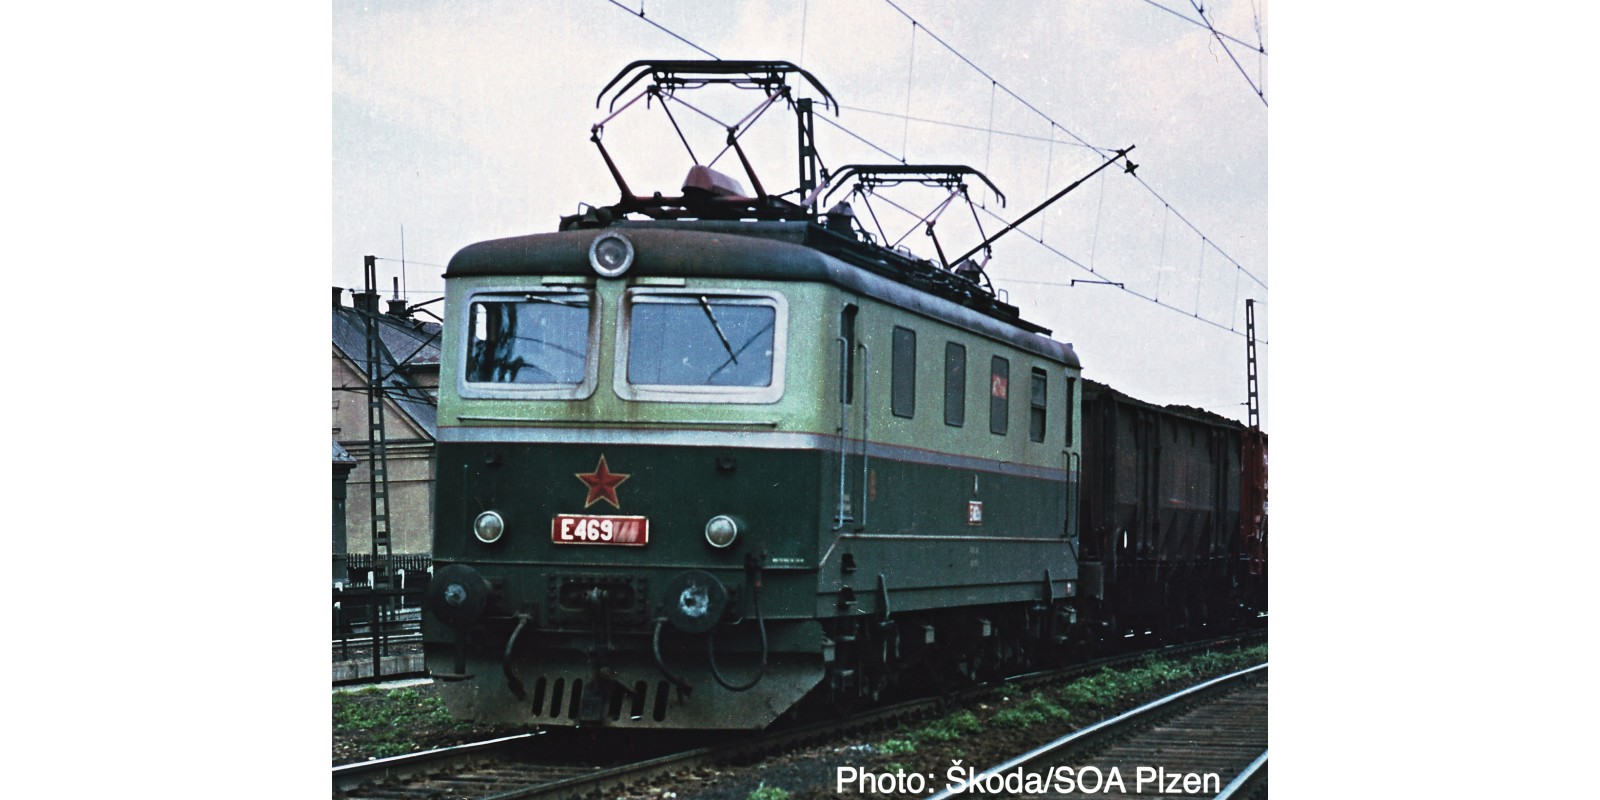 RO7510082 Electric locomotive class  E 469.1, CSD            